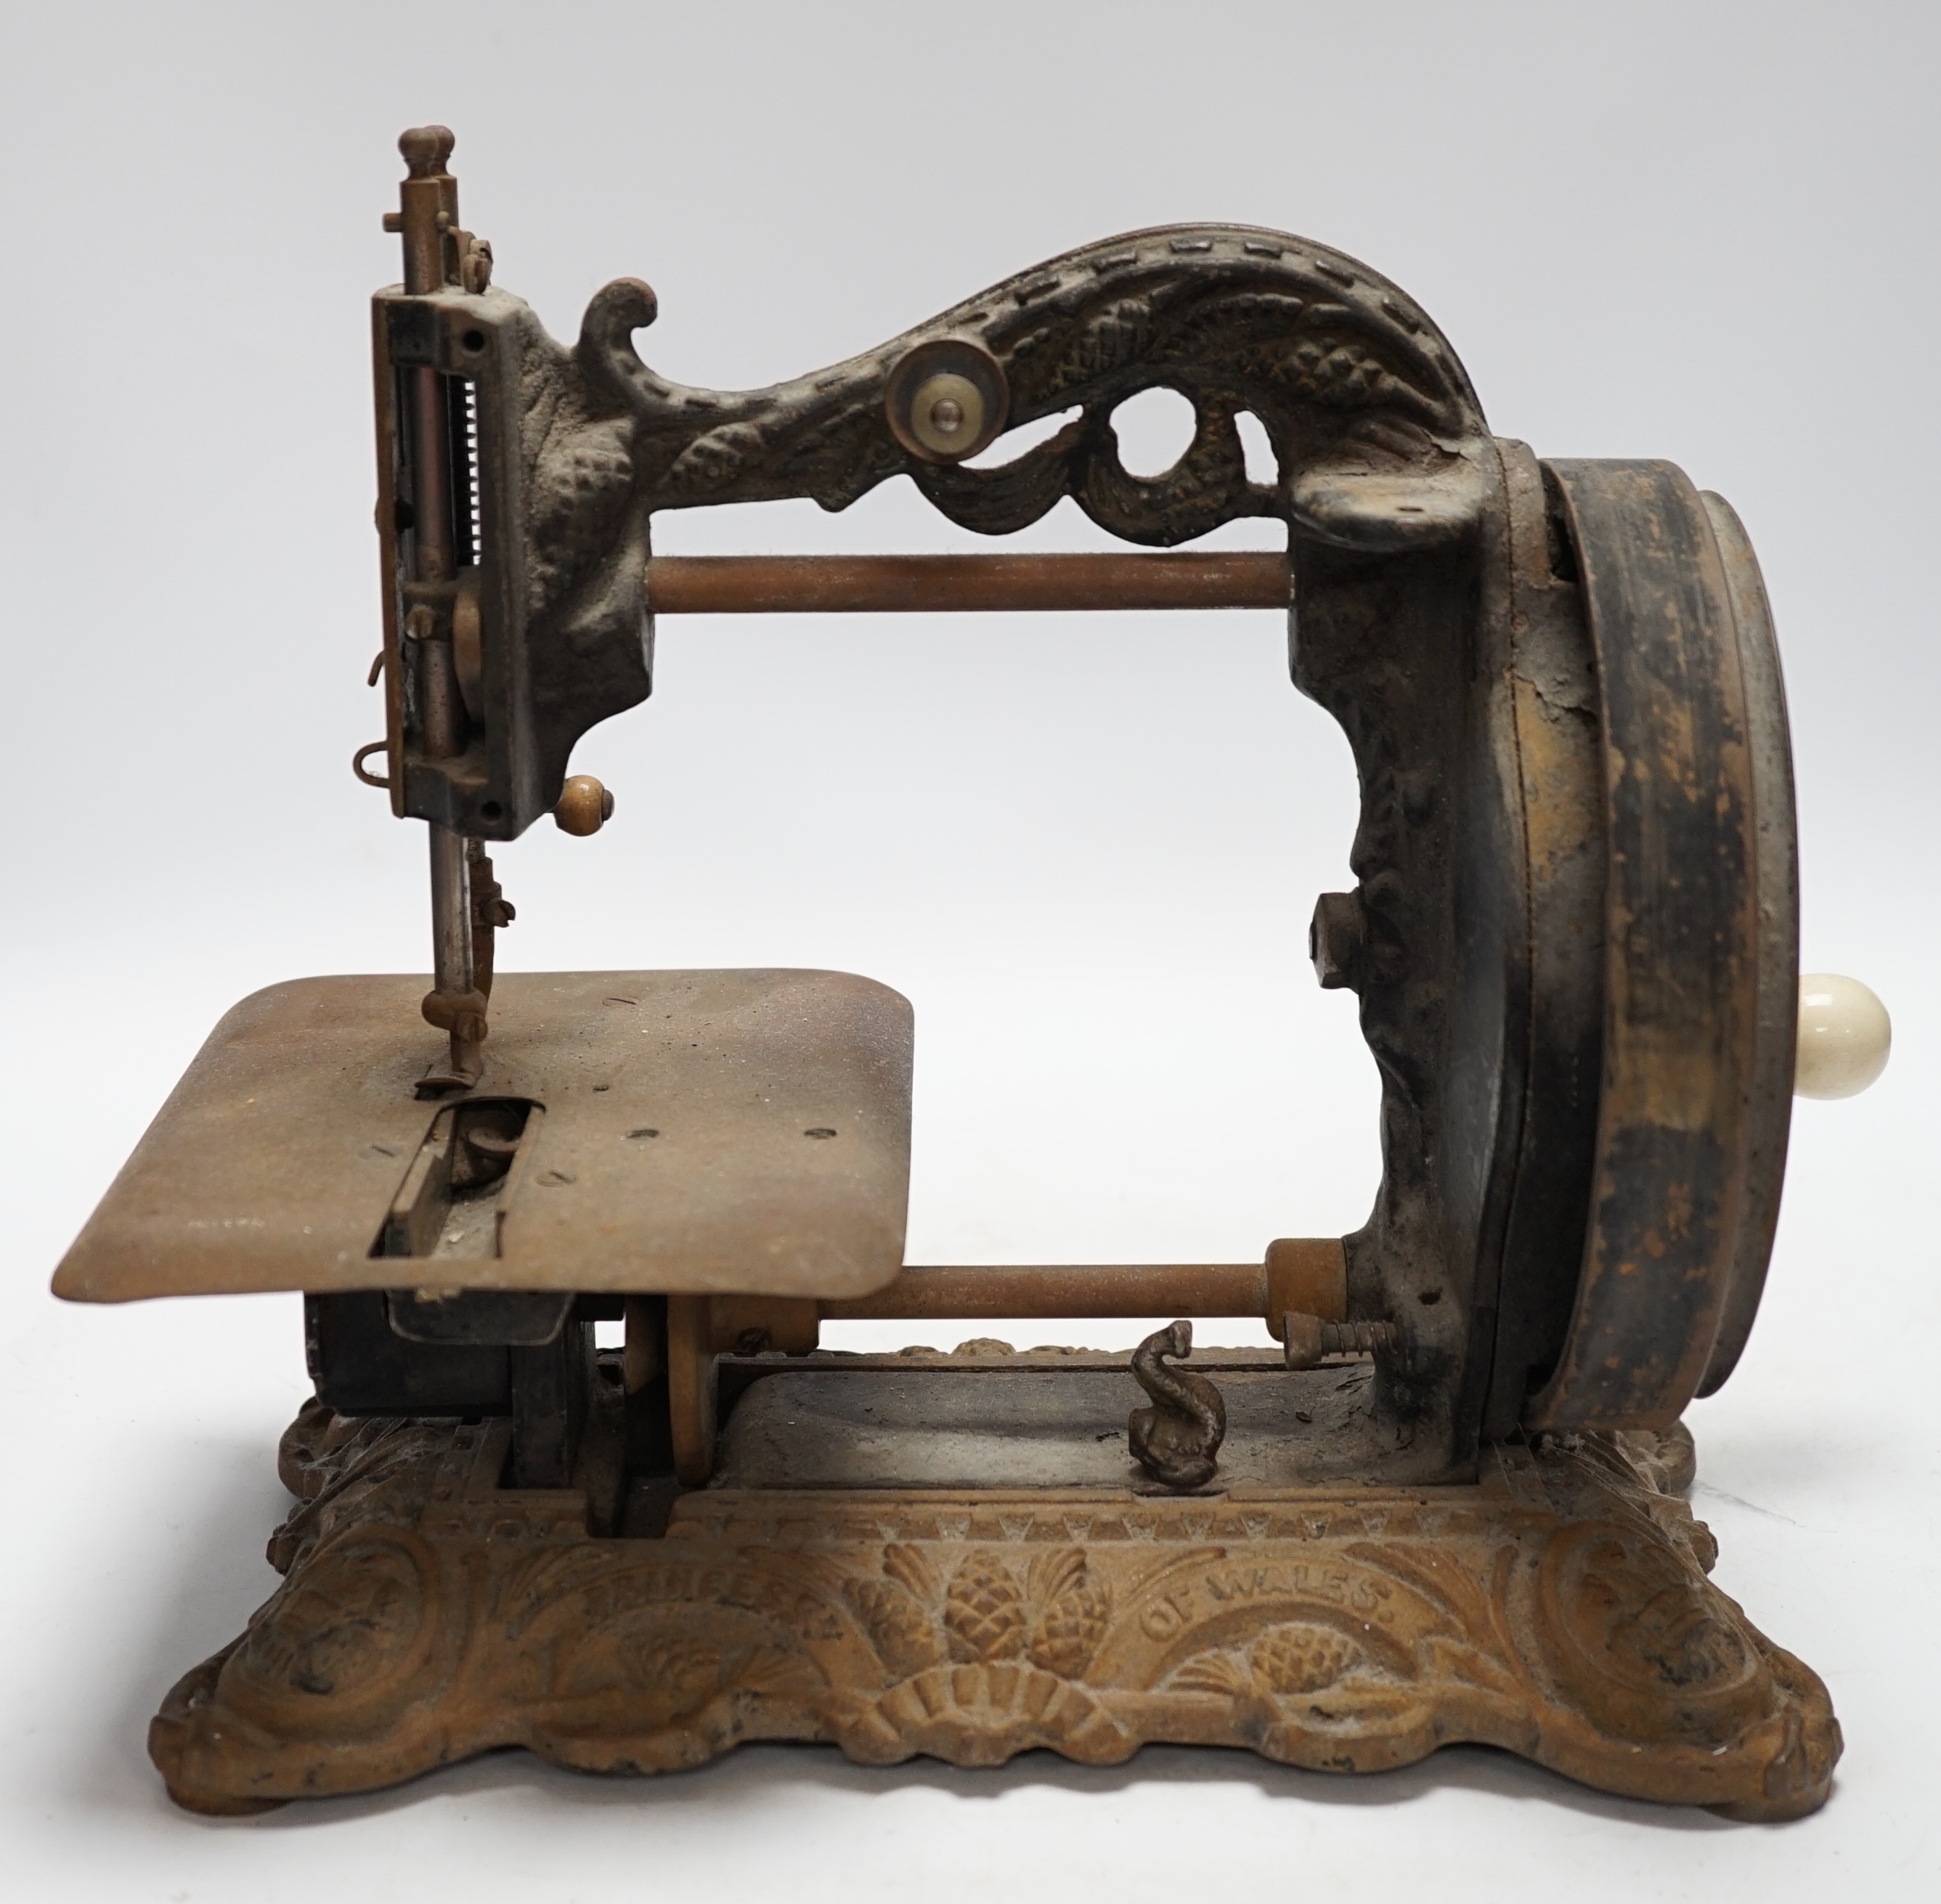 A Princess of Wales cast iron sewing machine